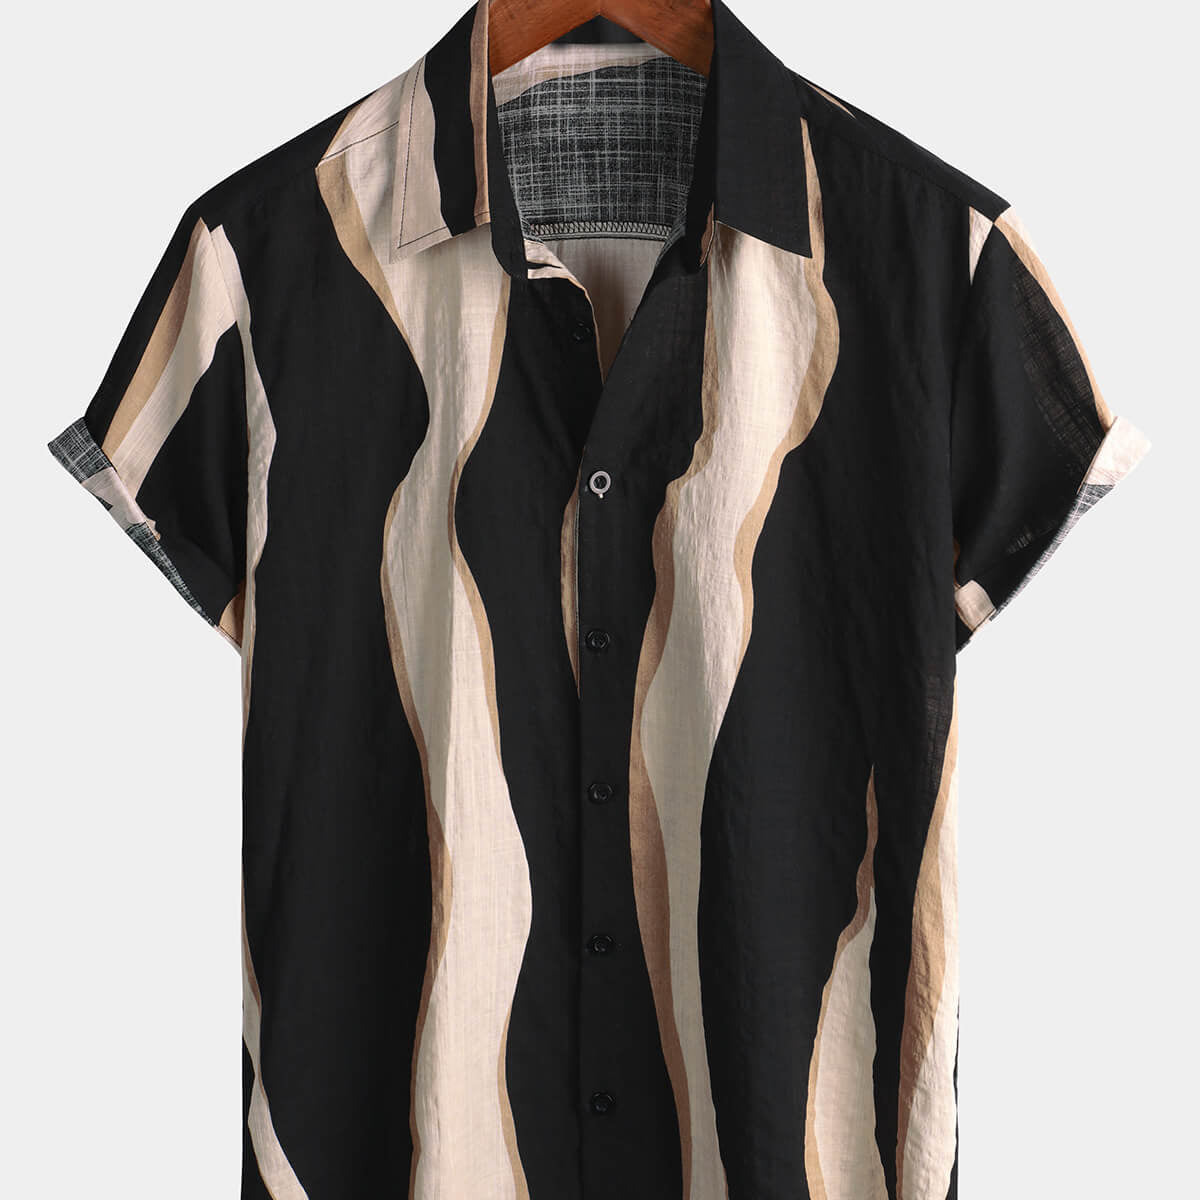 Men's Retro Casual Striped Summer Vacation Balck Button Up Short Sleeve Shirt